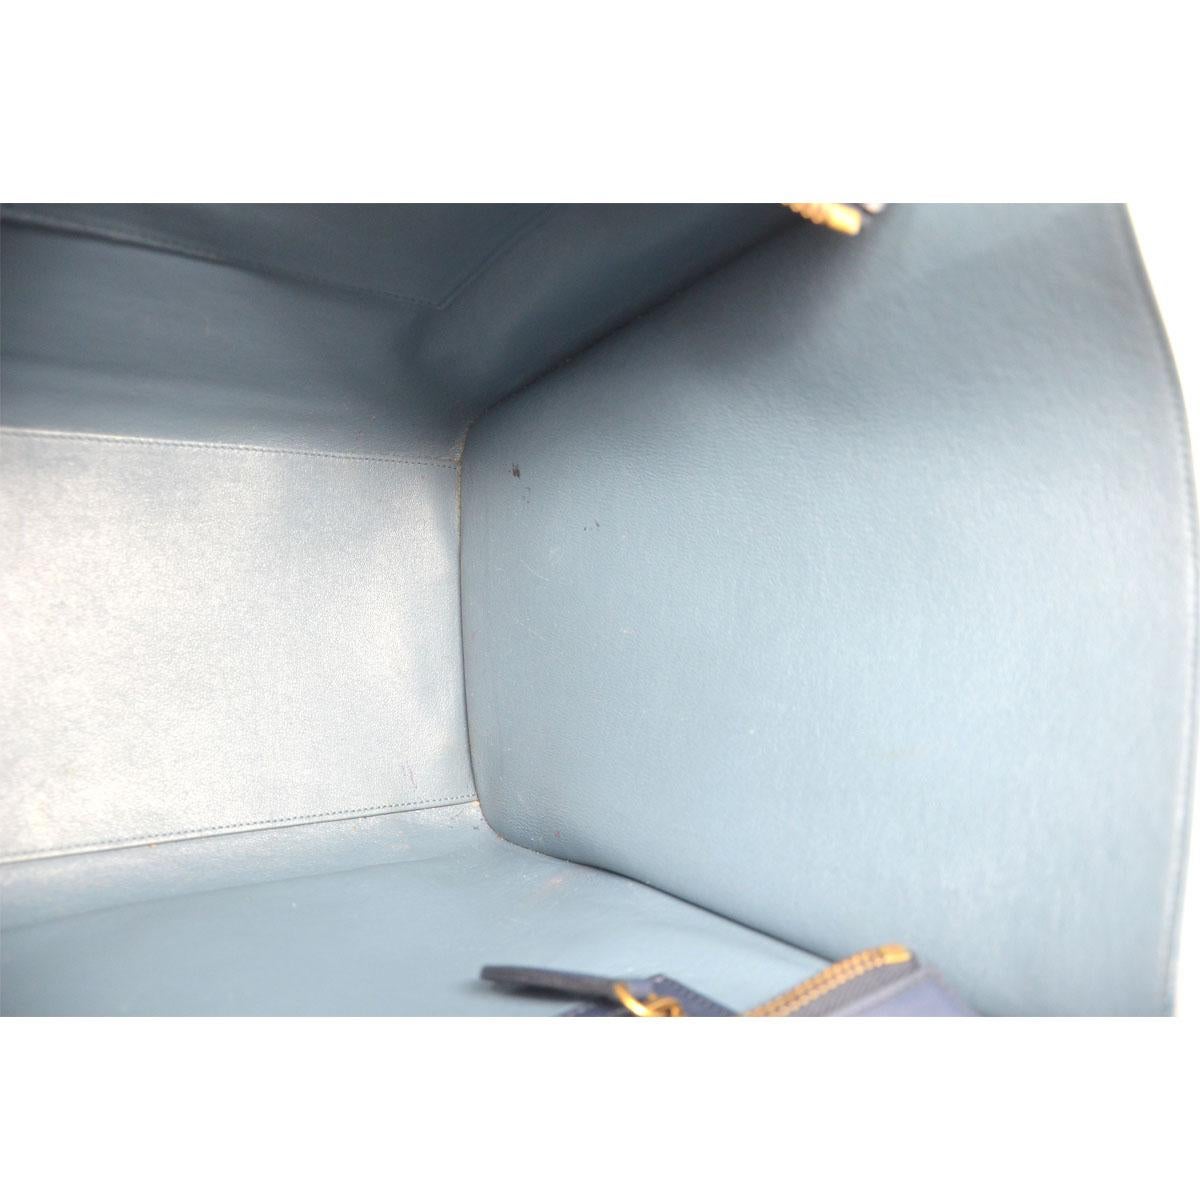 Celine Tri Color Navy, Blue and Gray Mini Luggage Leather Tote Handbag 2